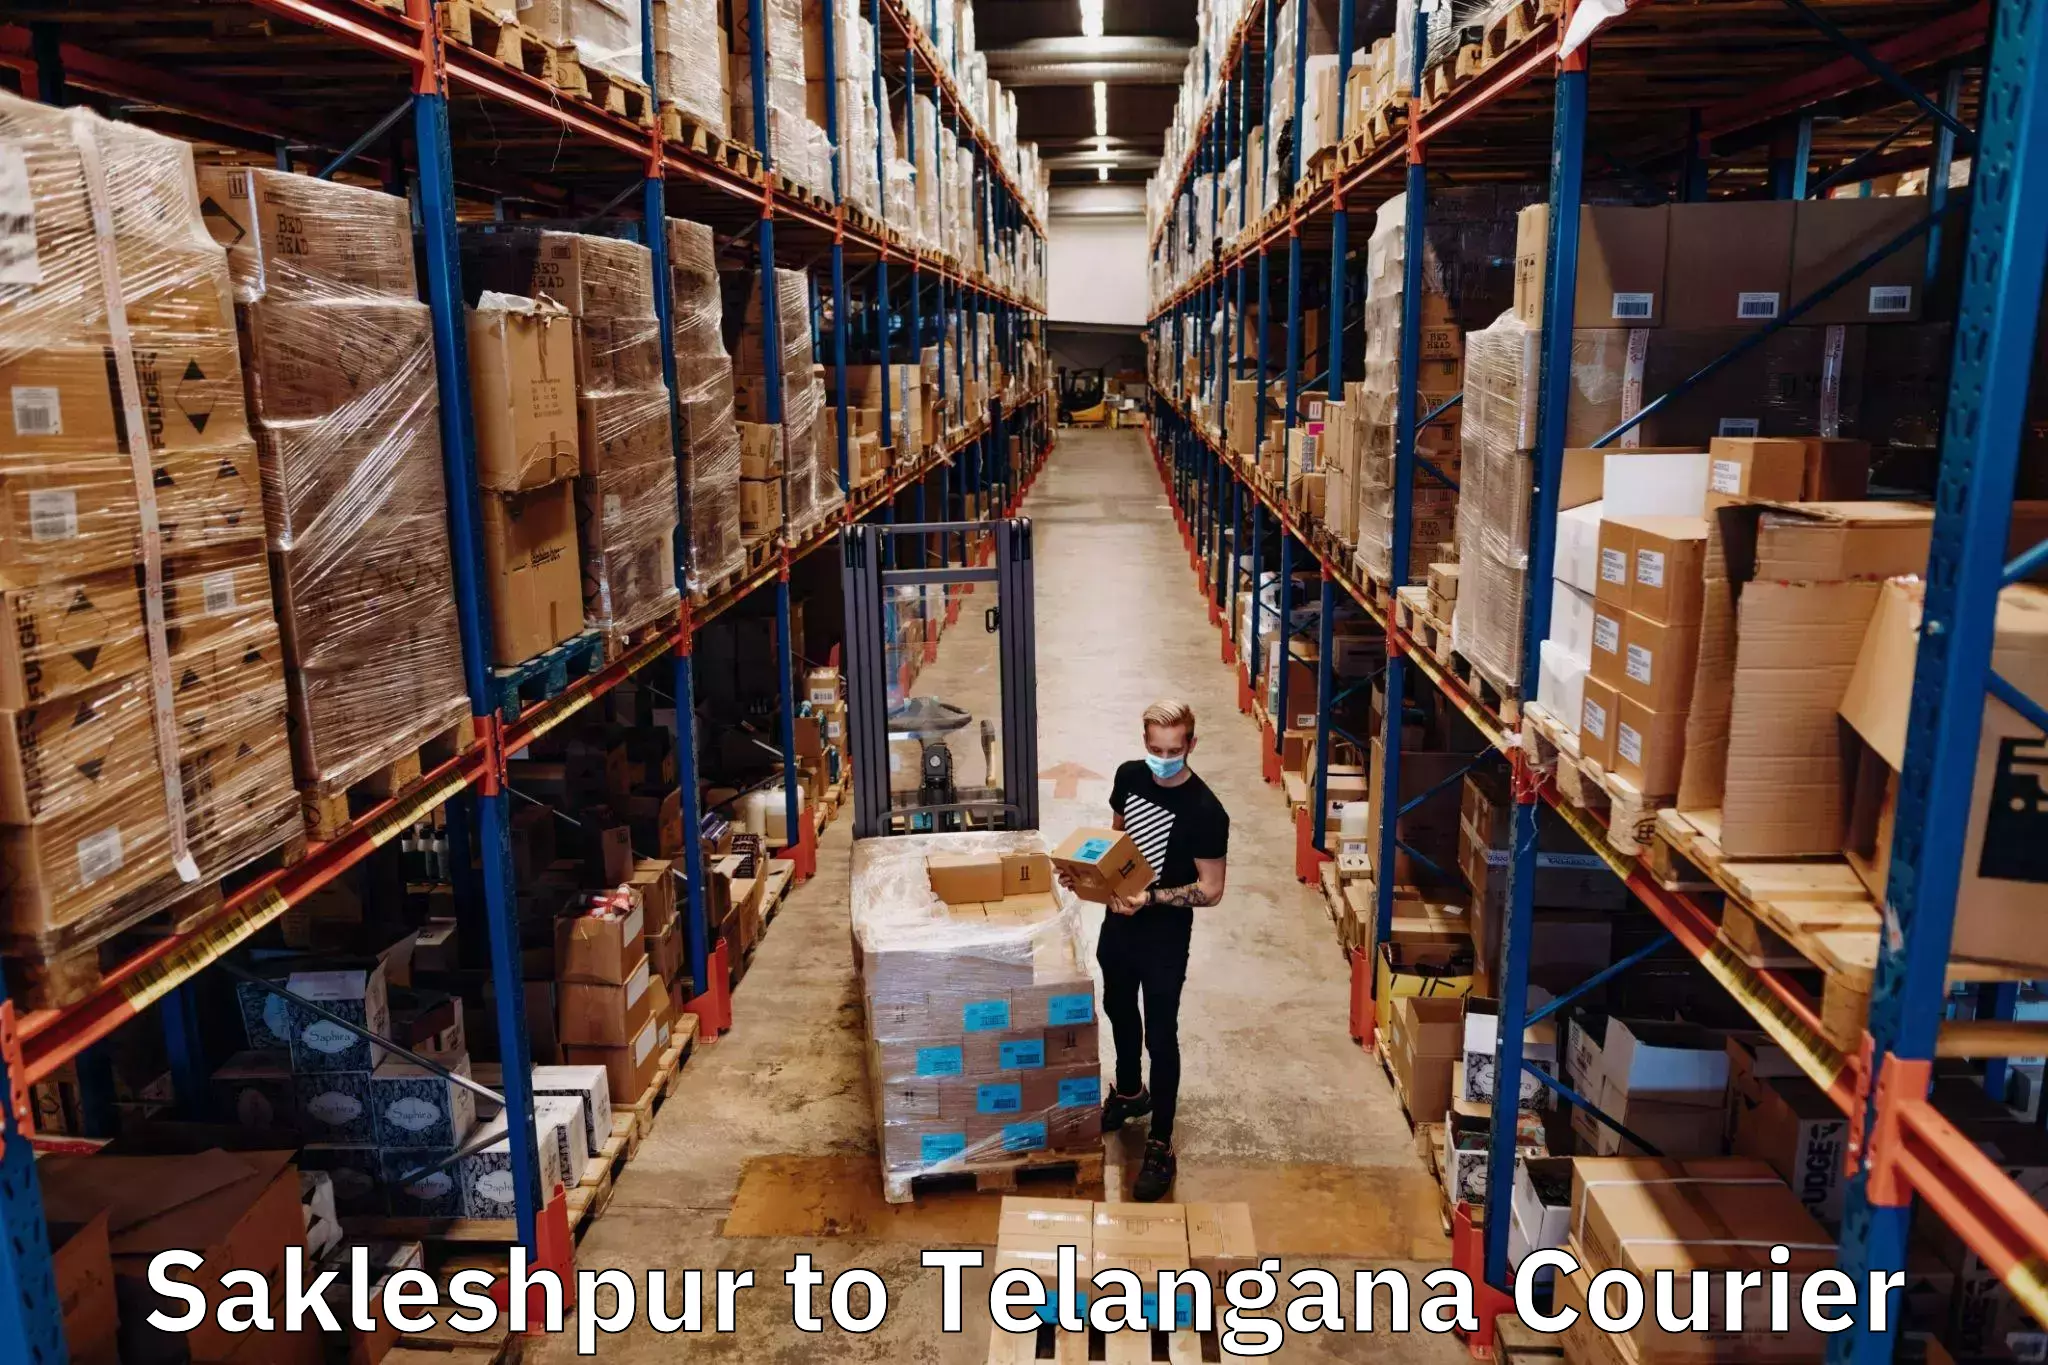 Professional courier handling Sakleshpur to Wanaparthy